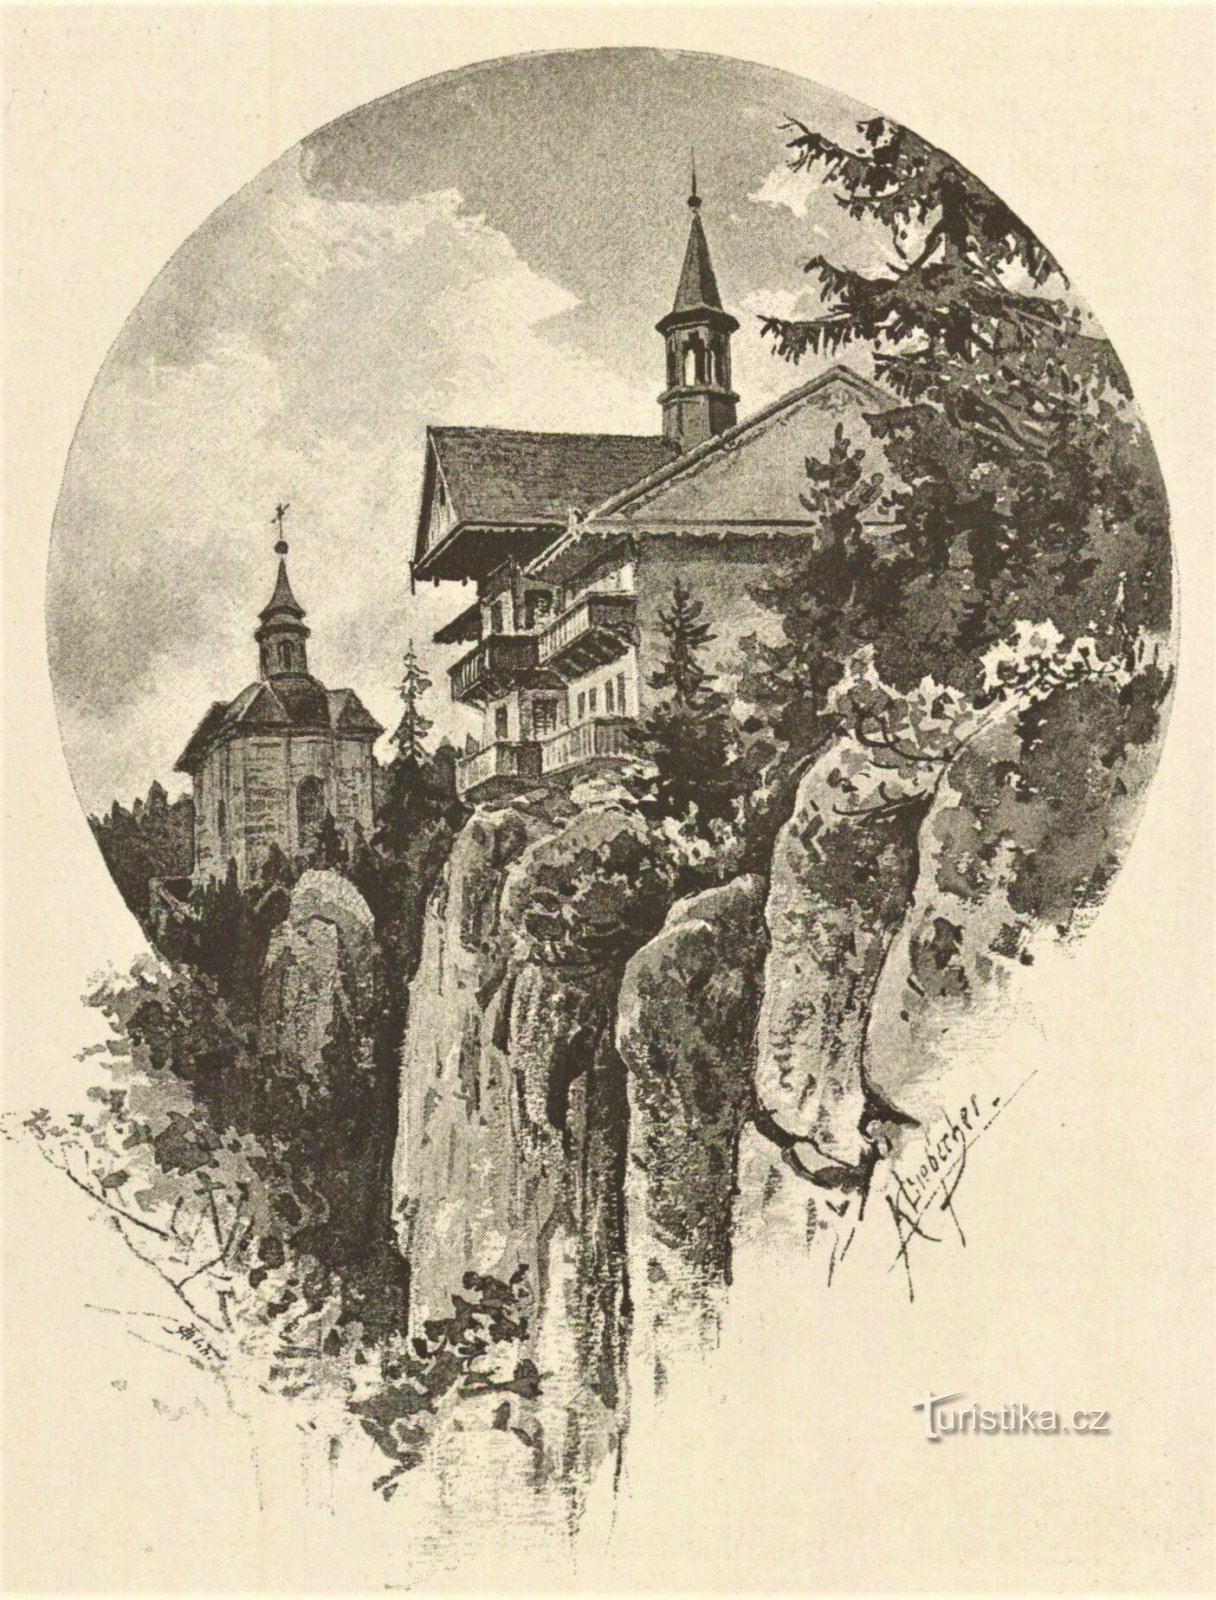 Вид на Звезду Адольфа Либшера второй половины XIX века.